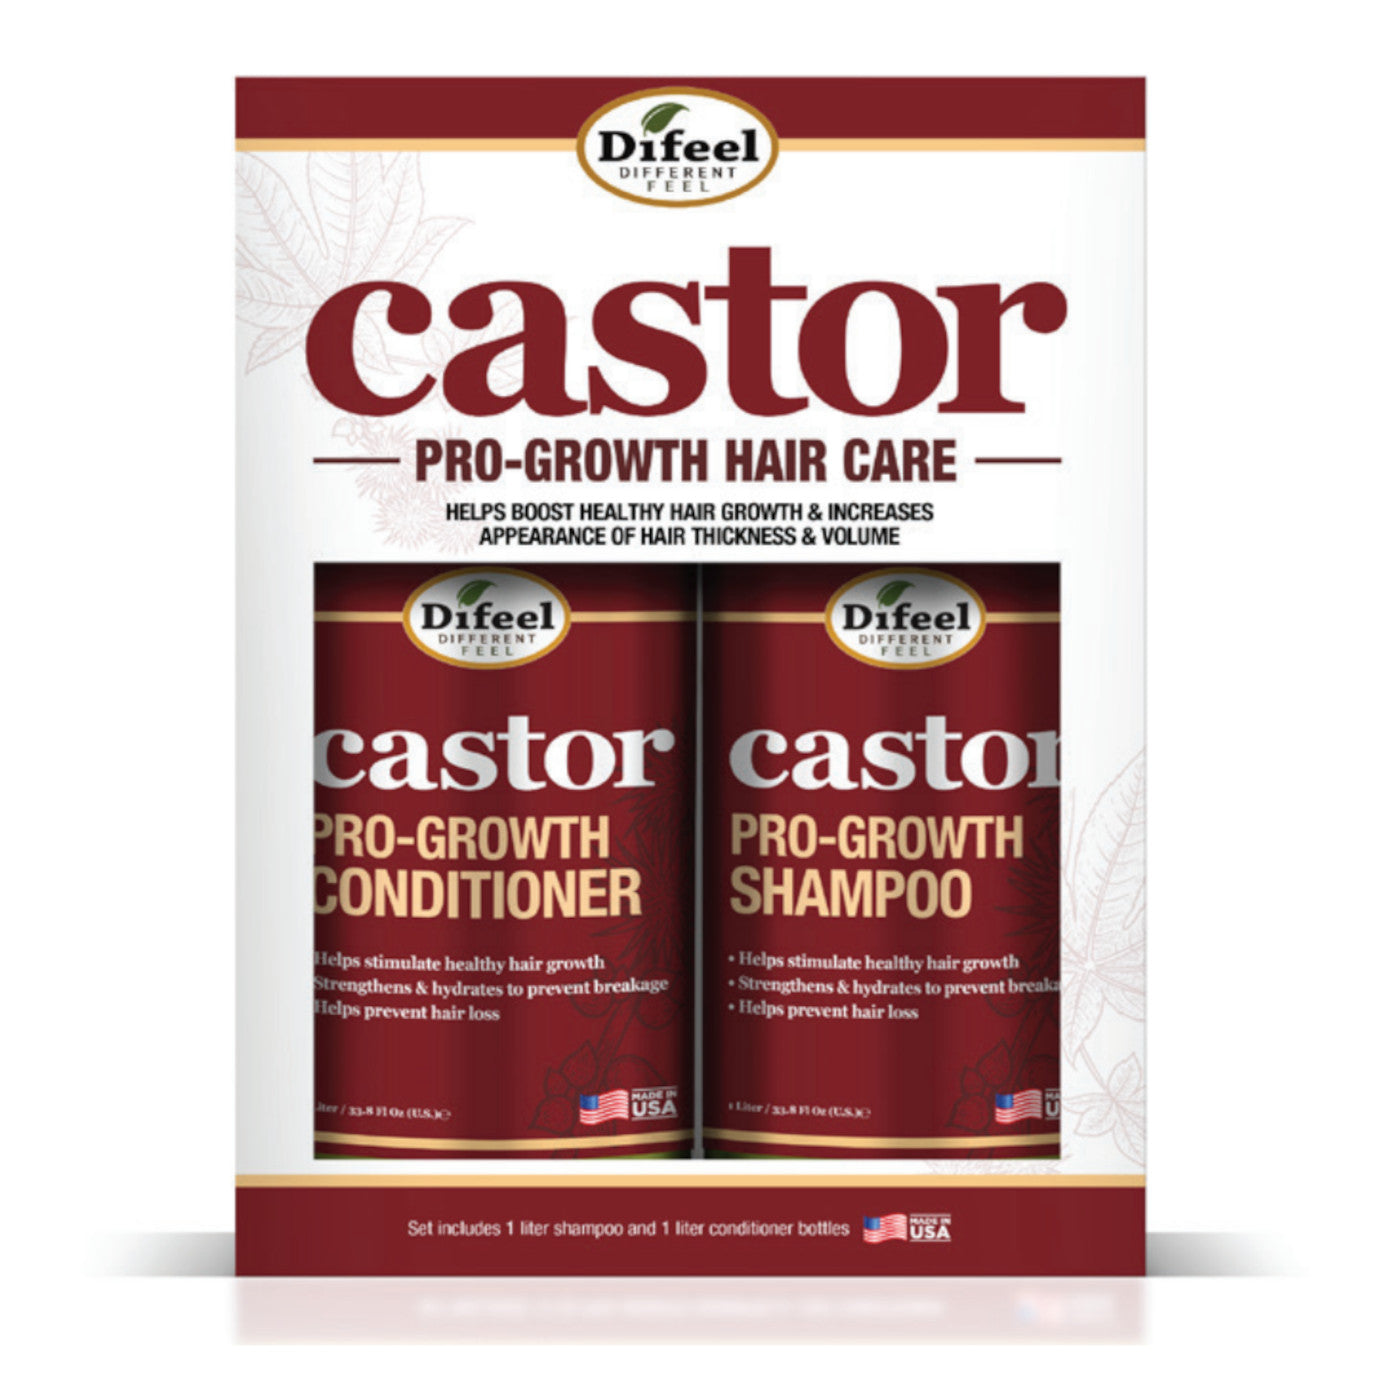 Difeel 2PC Castor Pro-Growth Shampoo & Conditoner Gift Box- Includes 33.8oz. Shampoo and Conditioner